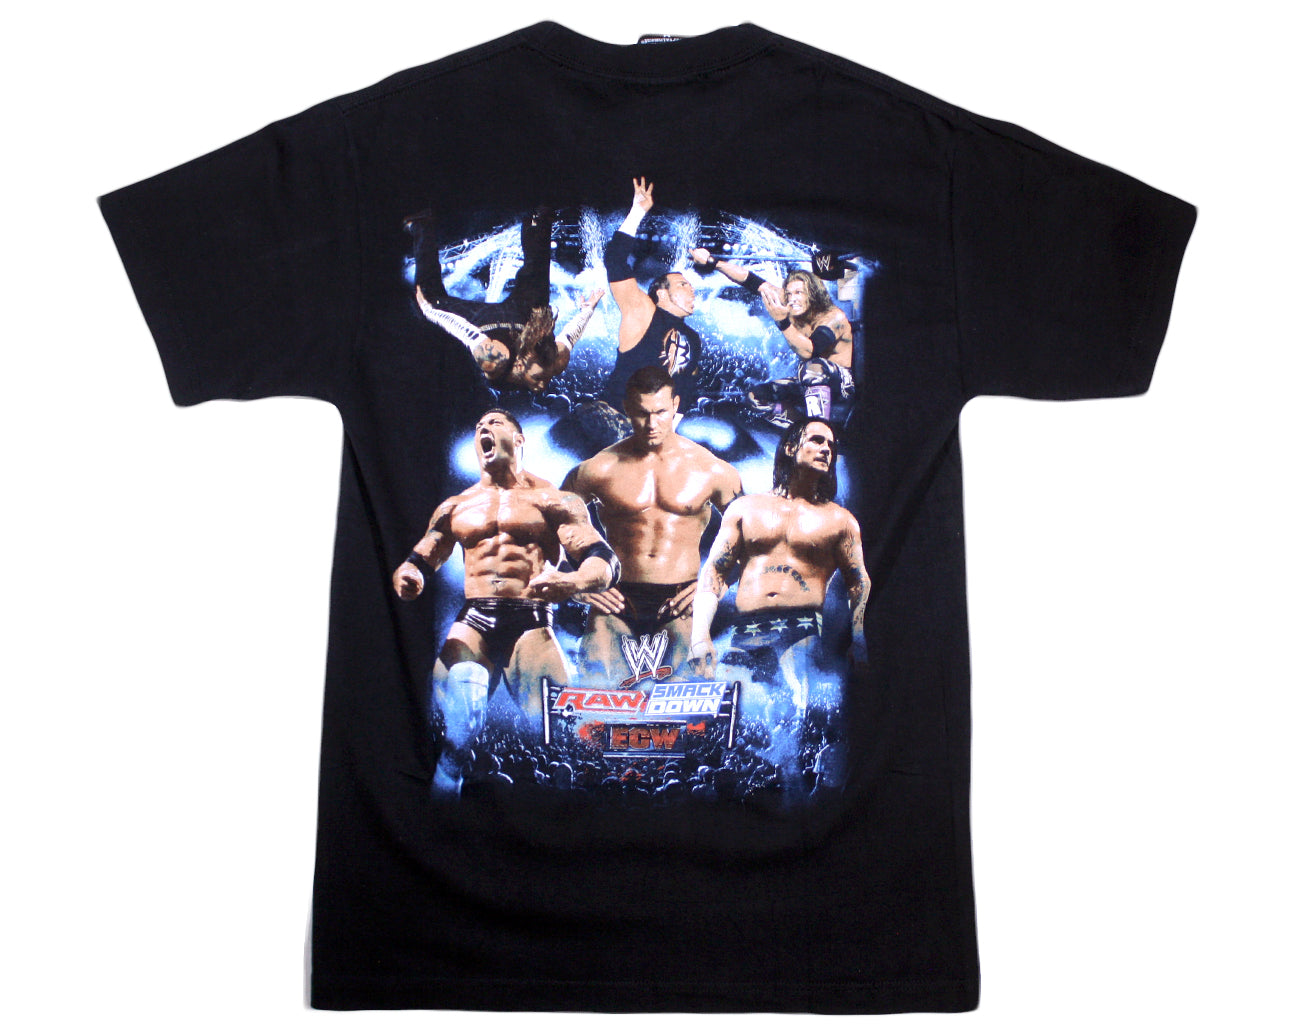 Raw WWE Vintage Black Raw Infant Medium T-Shirt